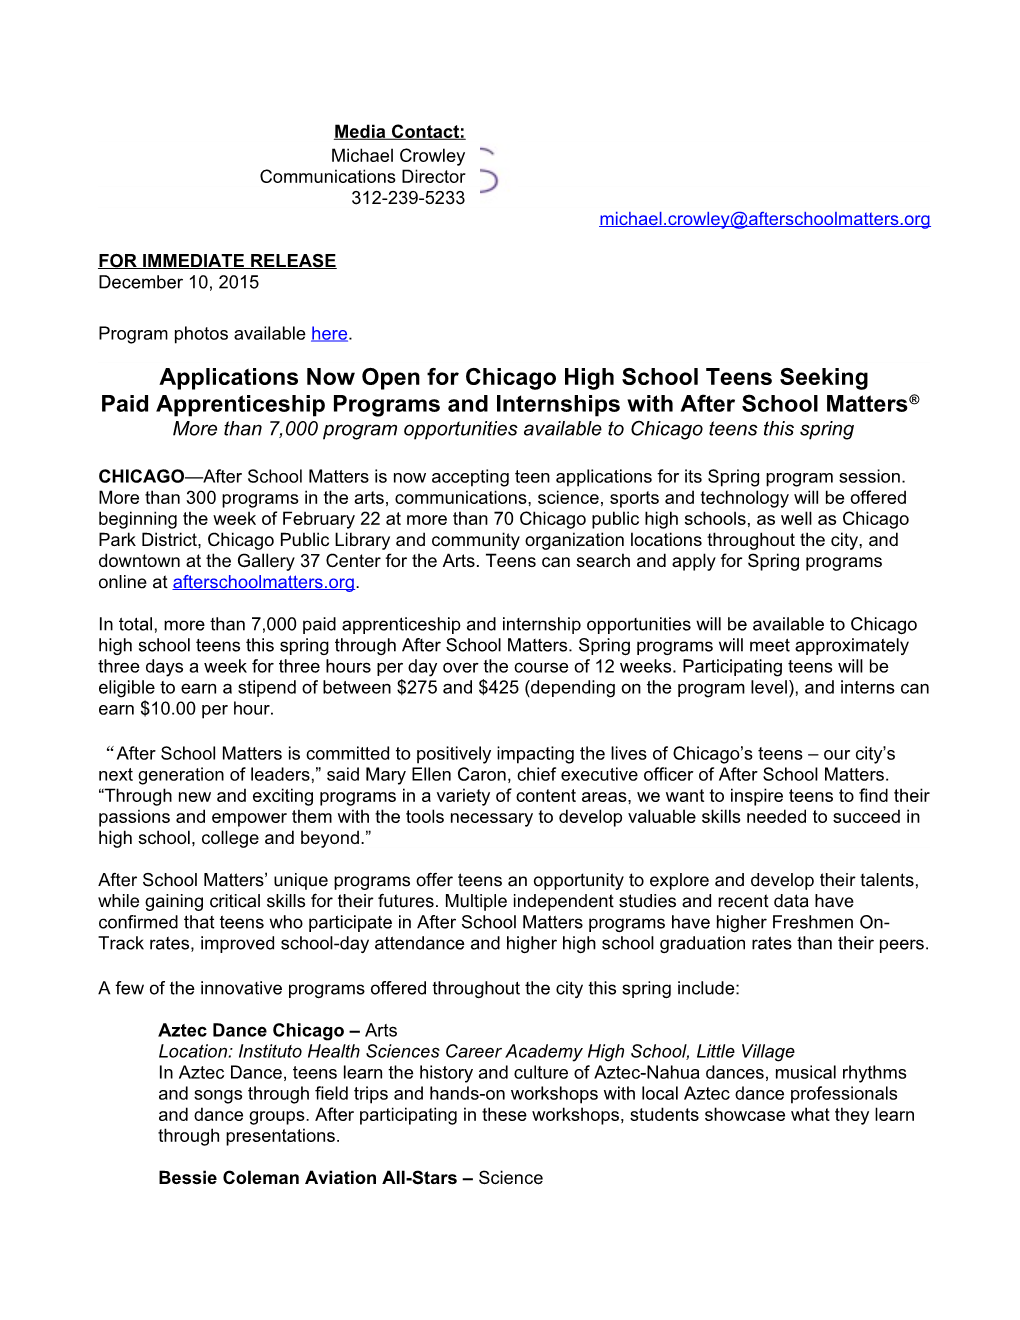 Applications Now Open for Chicago High School Teens Seeking